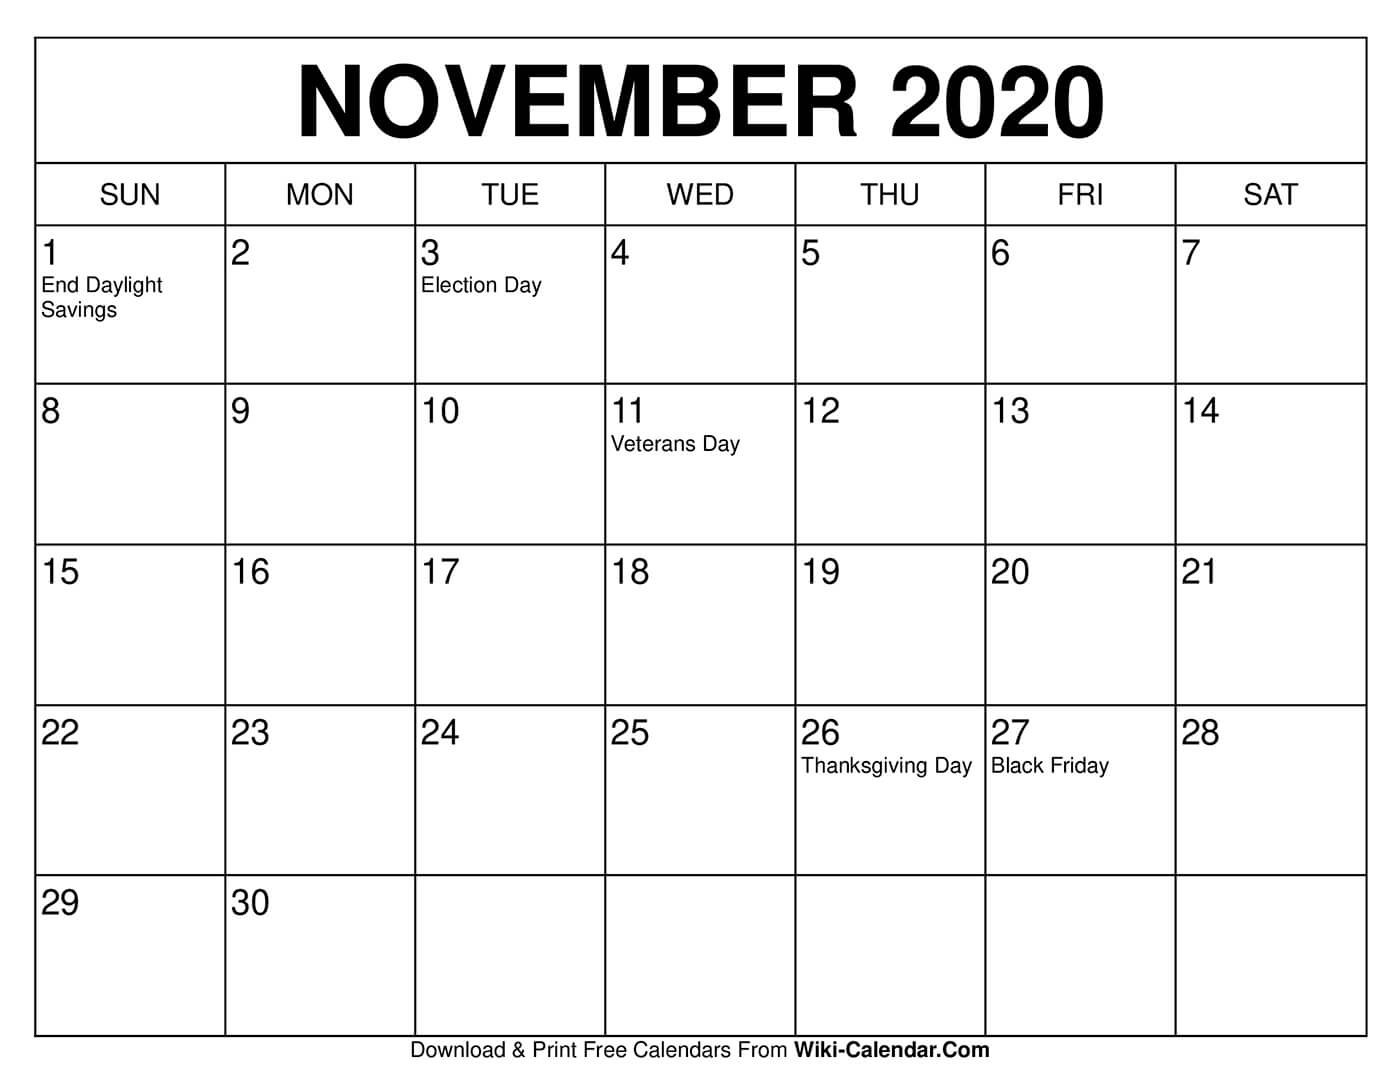 Free Printable November 2020 Calendars - Wiki Calendar